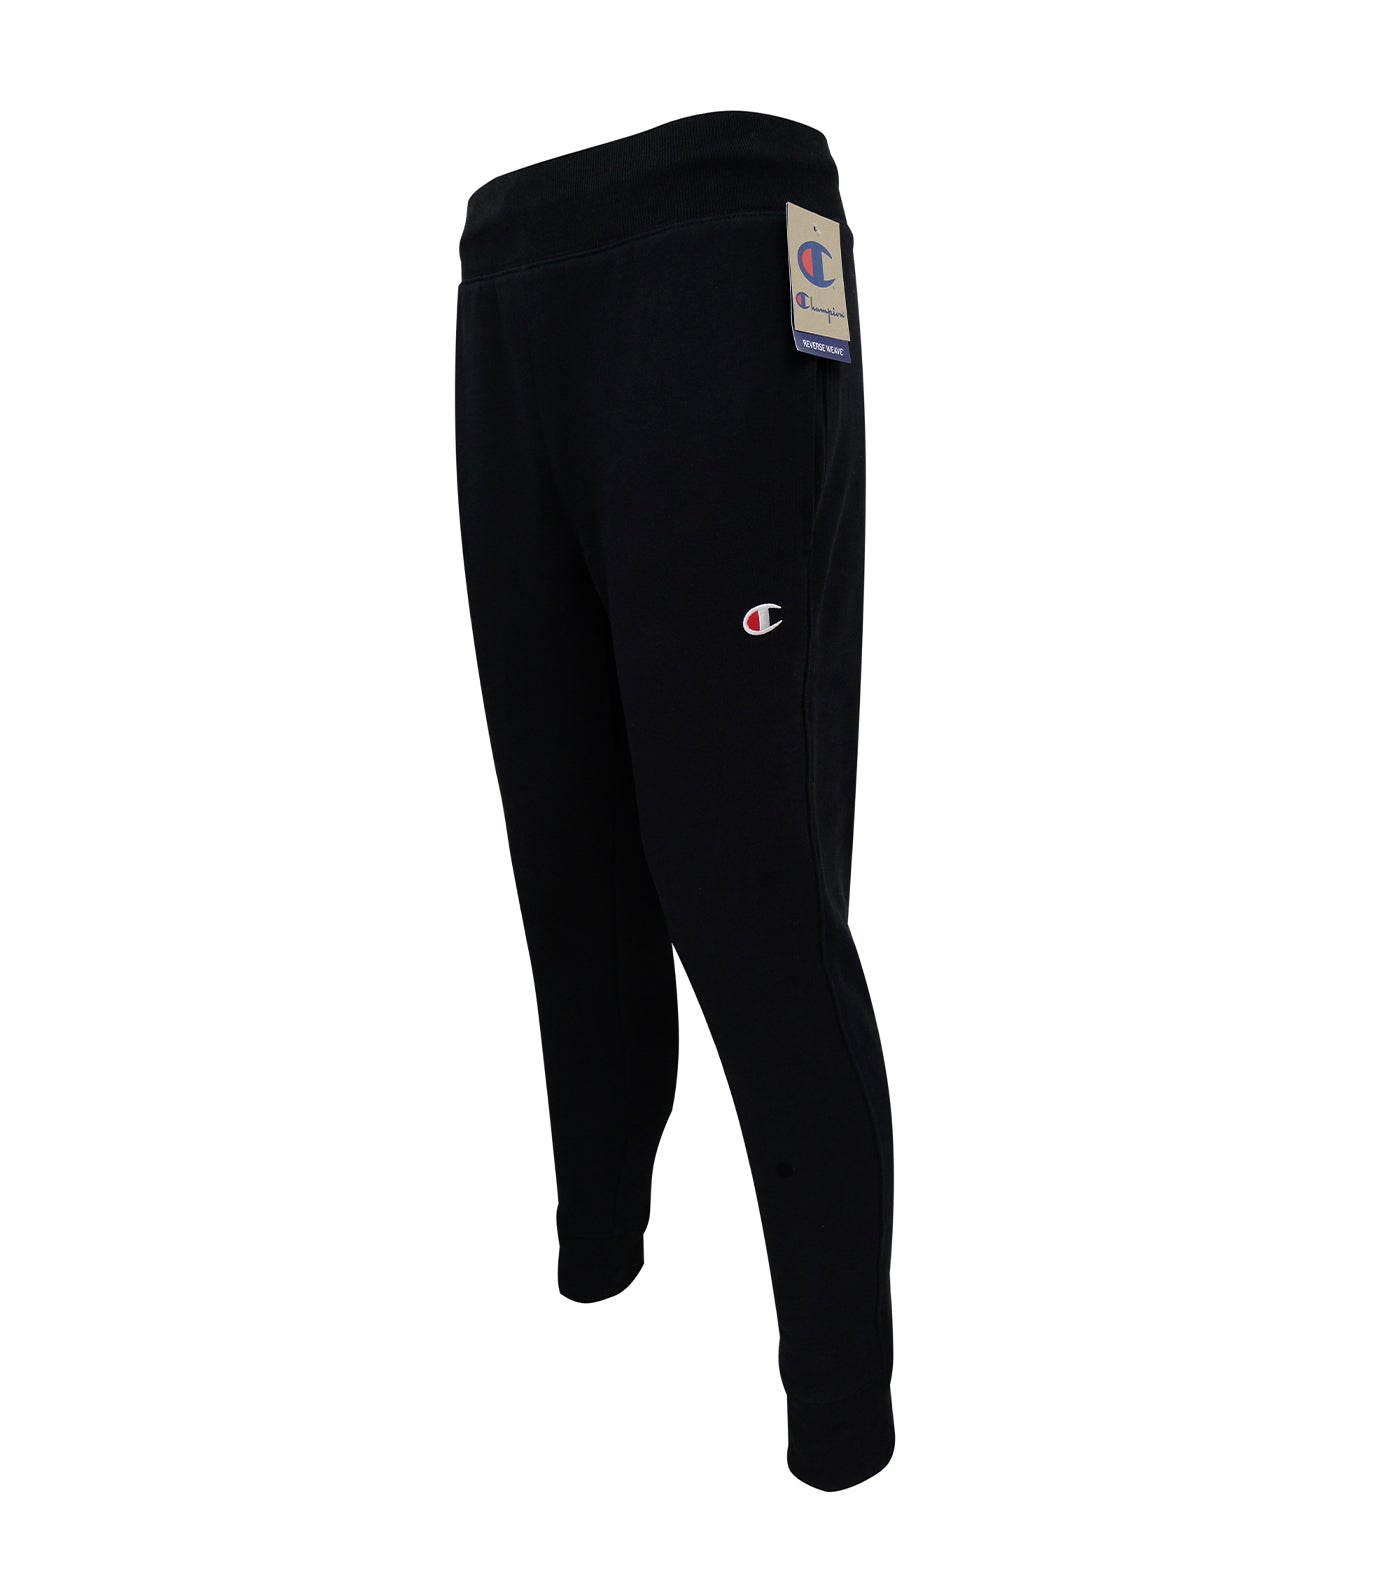 Champion Reverse Weave Sweatpants - Black